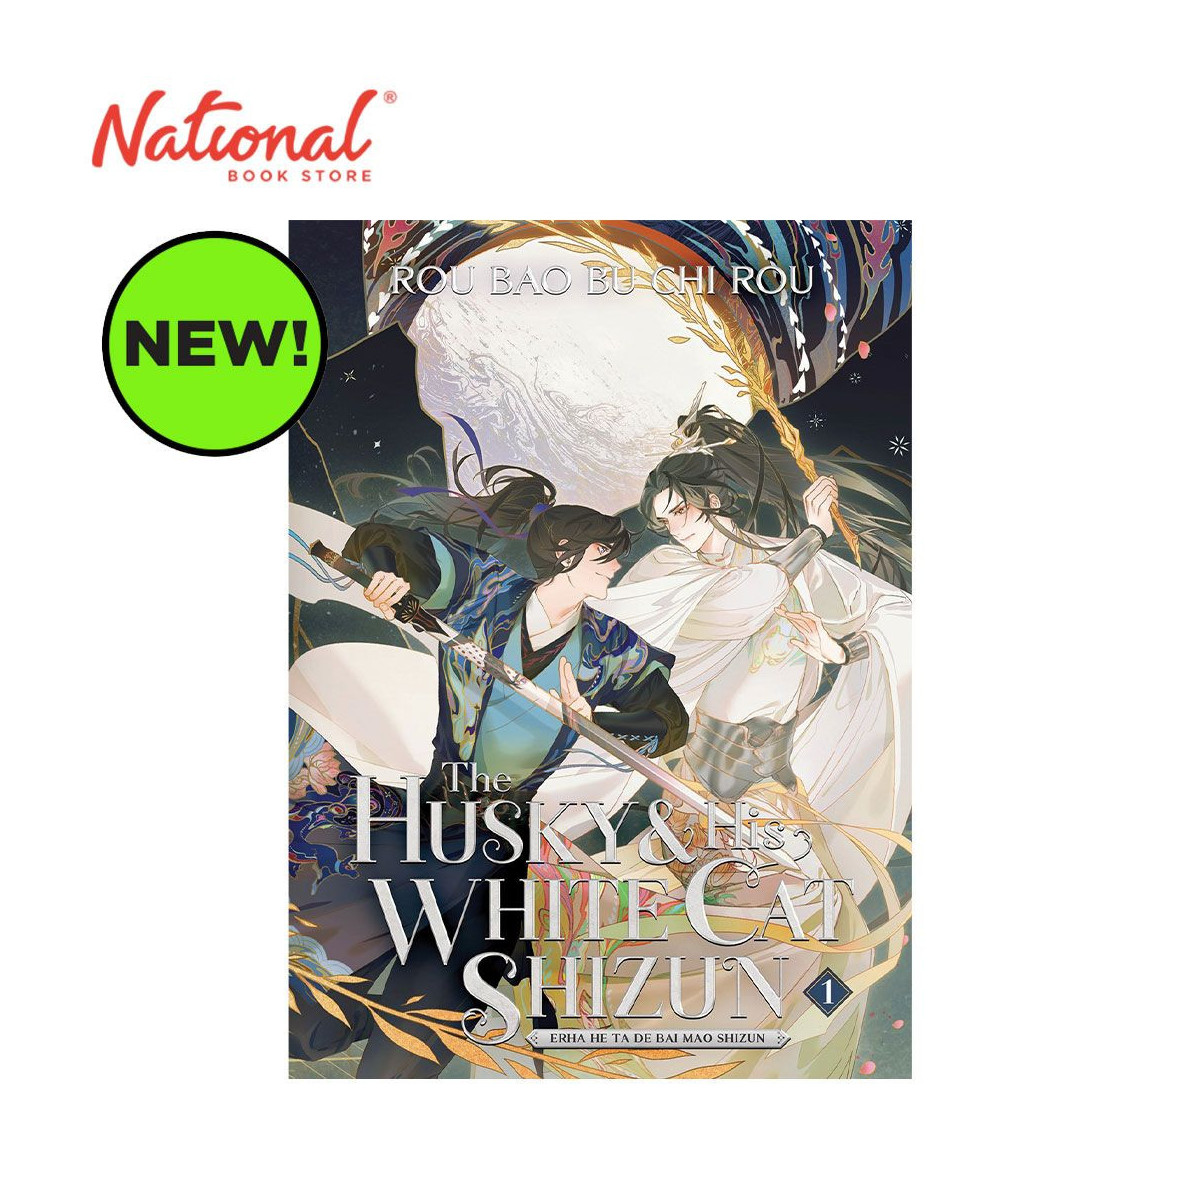 The Husky And His White Cat Shizun Volume 1 by Rou Bao Bu Chi Rou - Trade Paperback - Teens Fiction